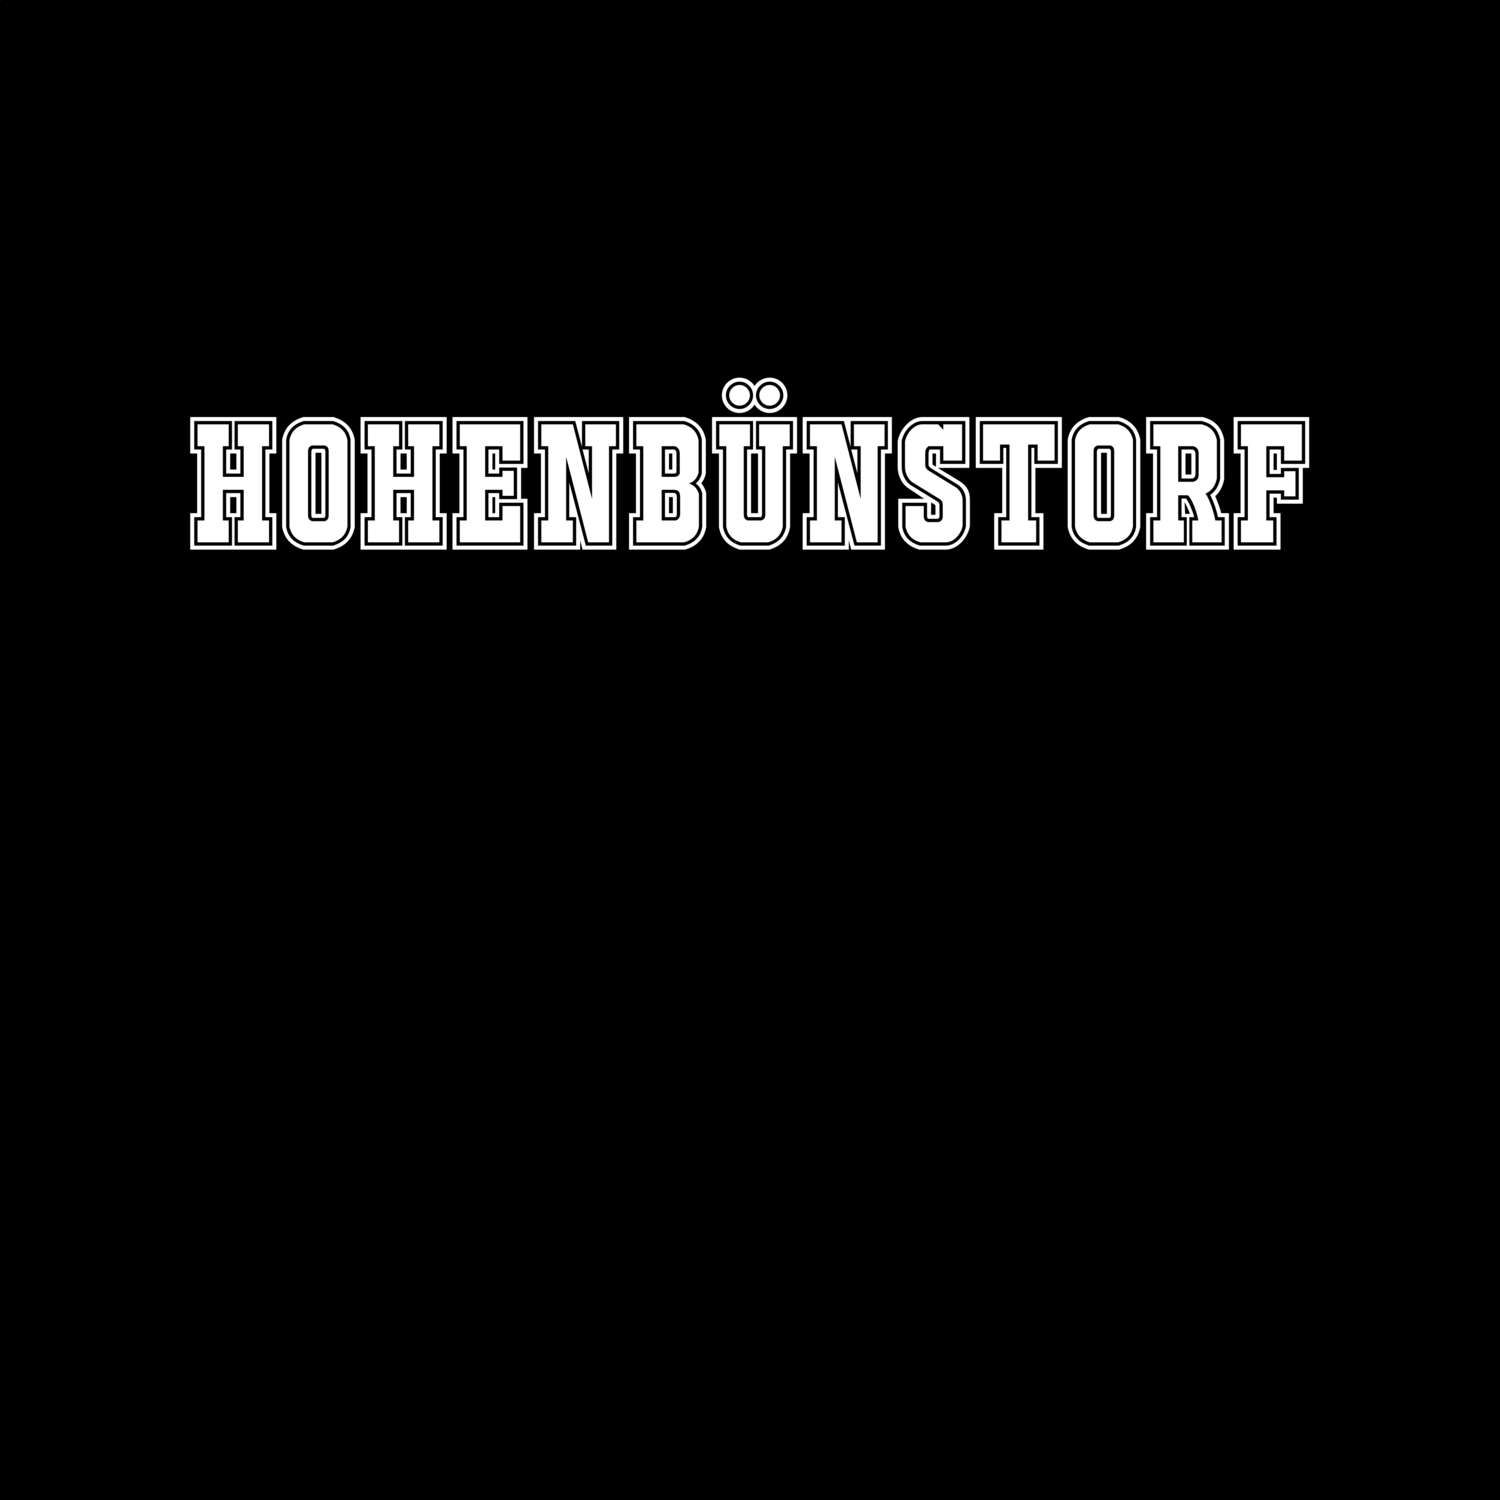 Hohenbünstorf T-Shirt »Classic«